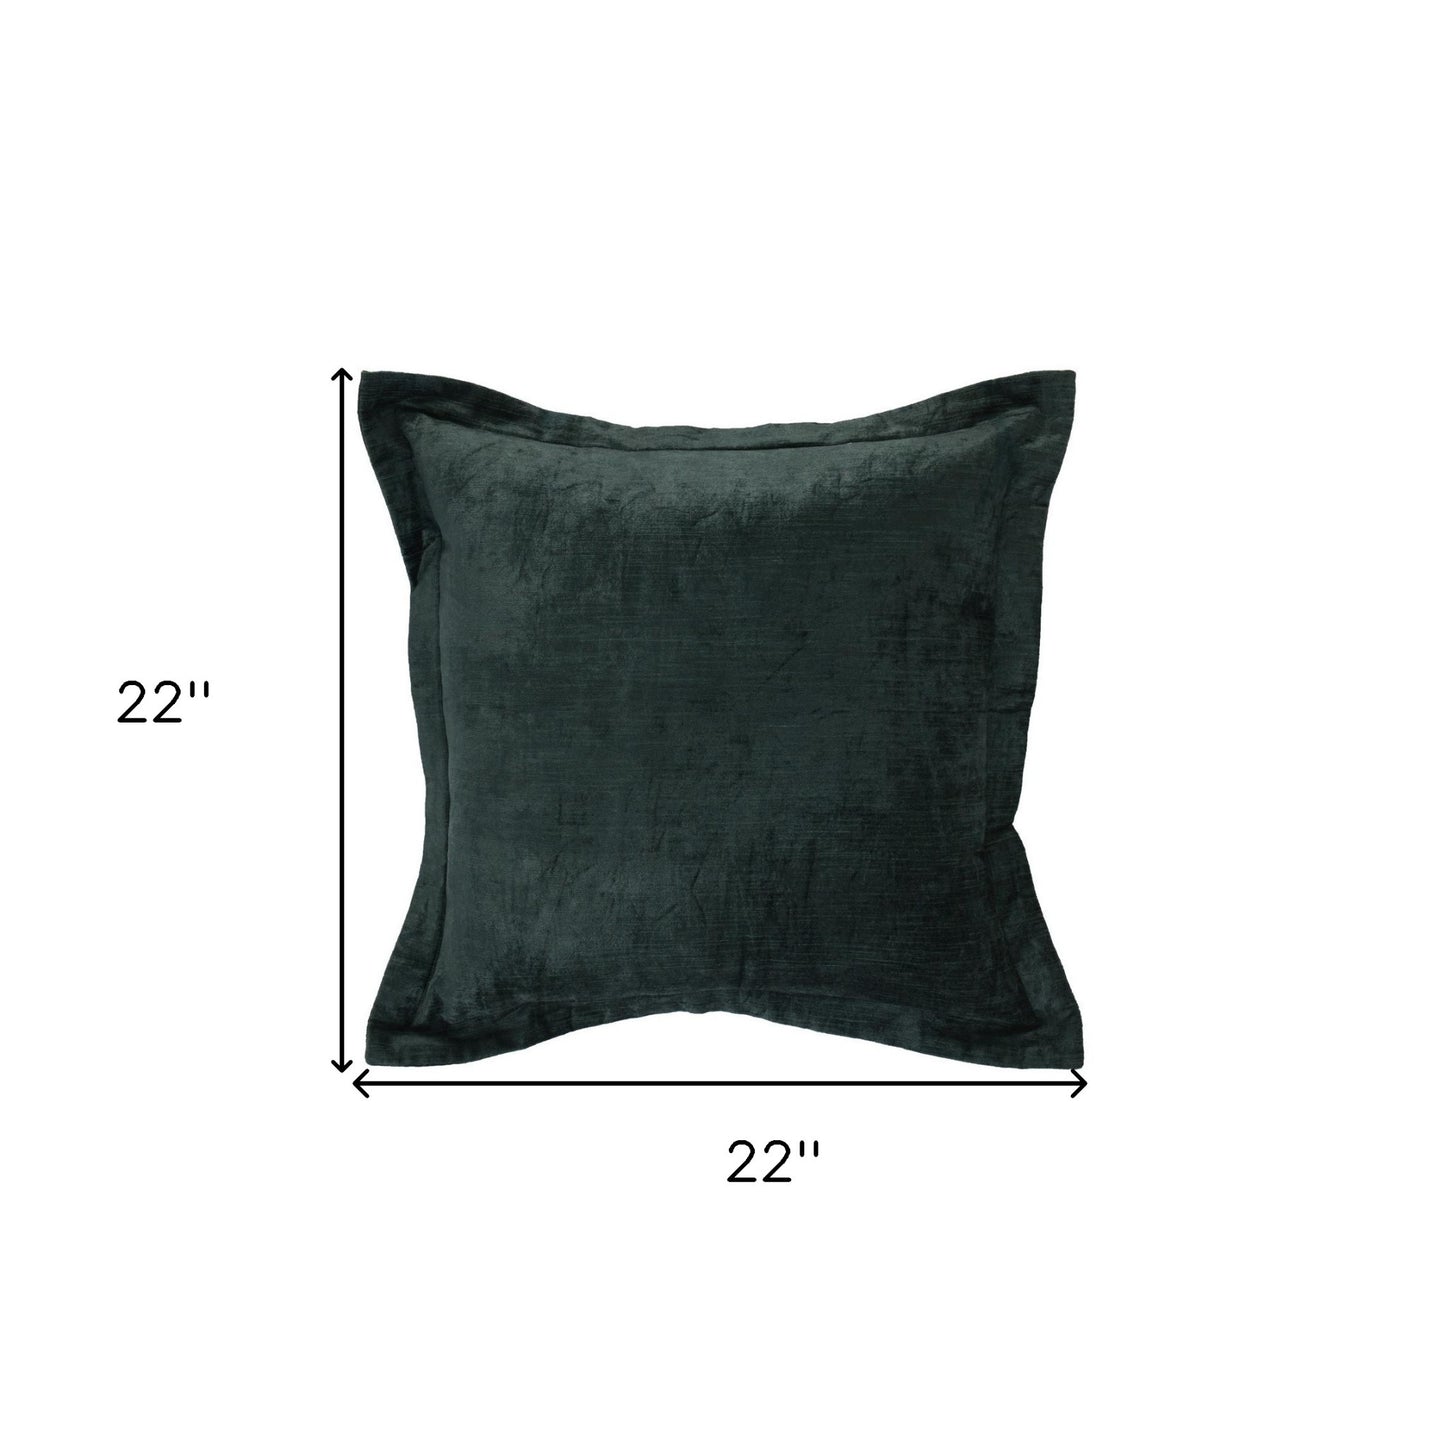 22" X 22" Green Velvet Zippered Pillow